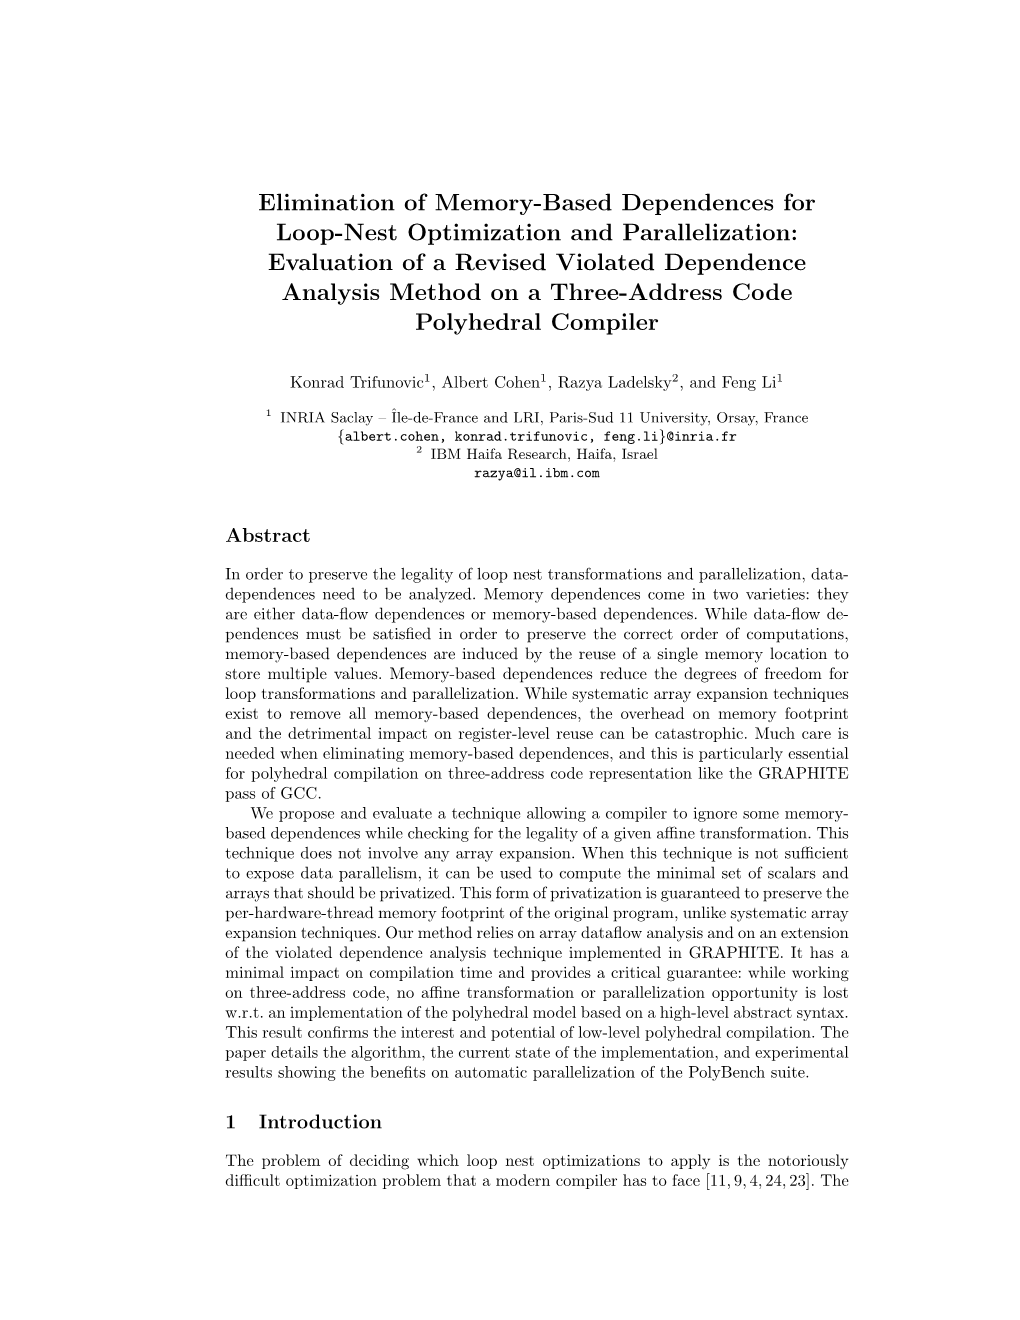 Elimination of Memory-Based Dependences For